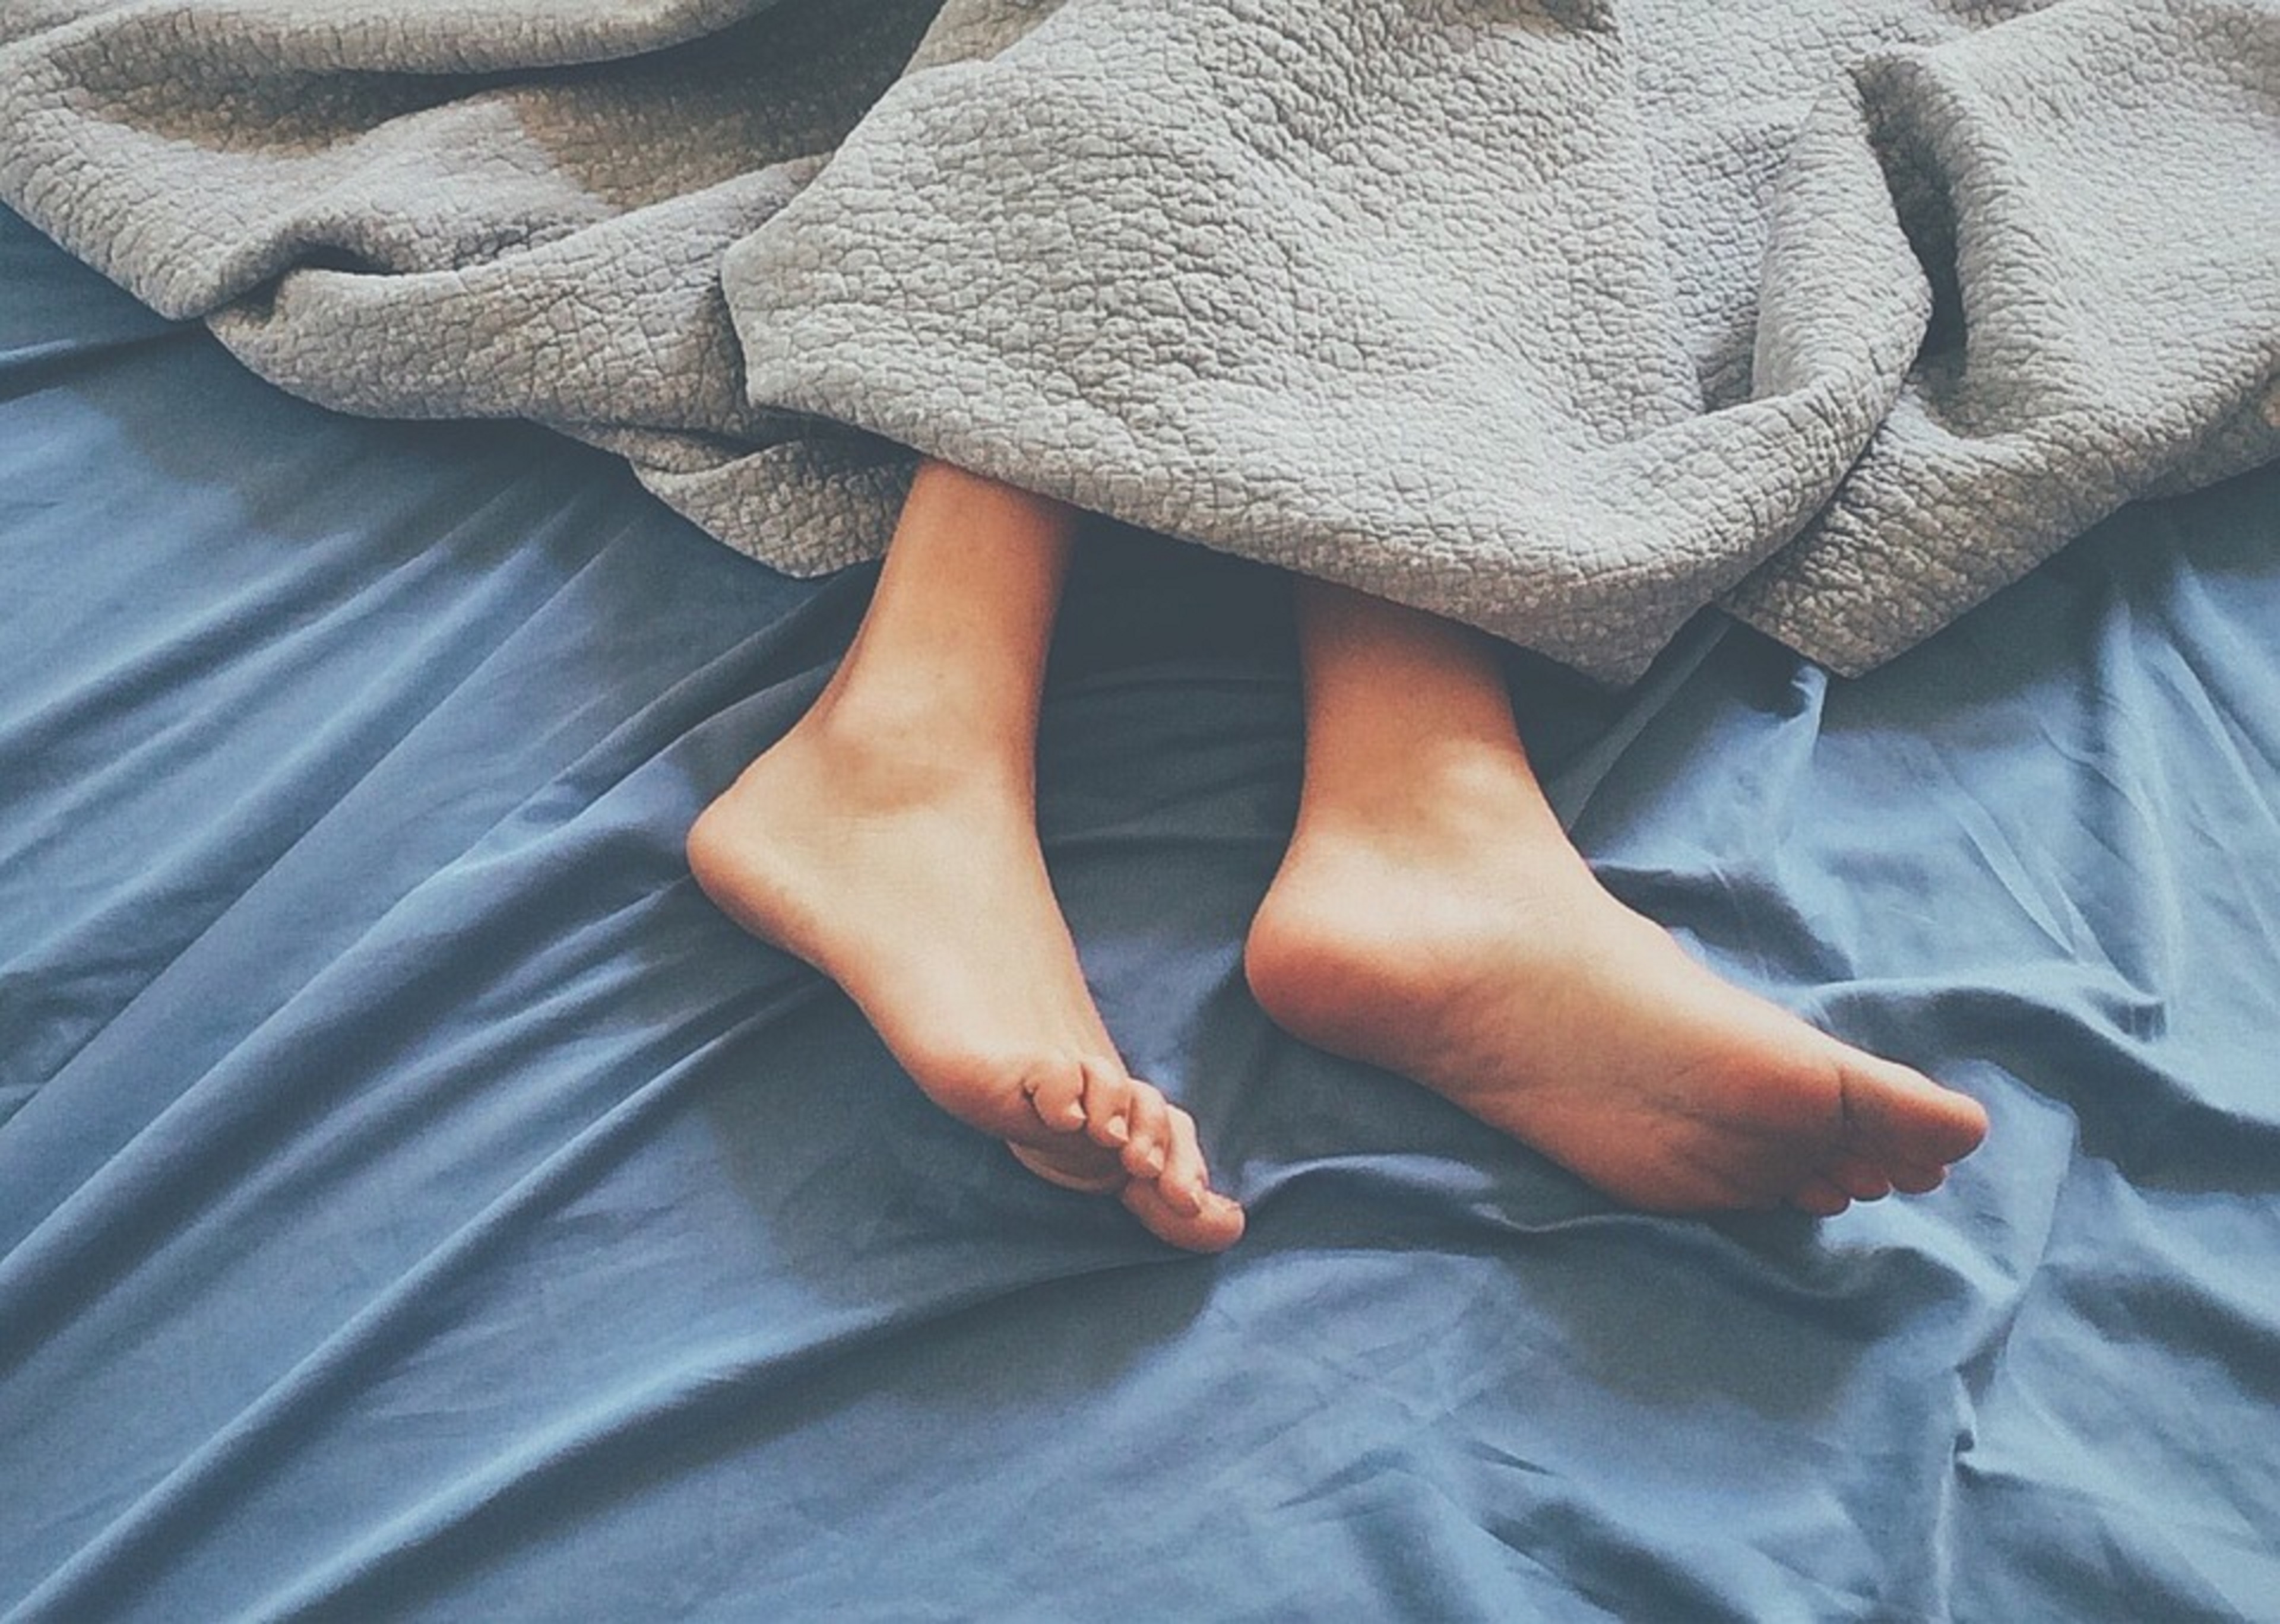 Скучающая нога. Ступни девушек. Ноги под одеялом. Стопы девушек. Ноги из под одеяла.